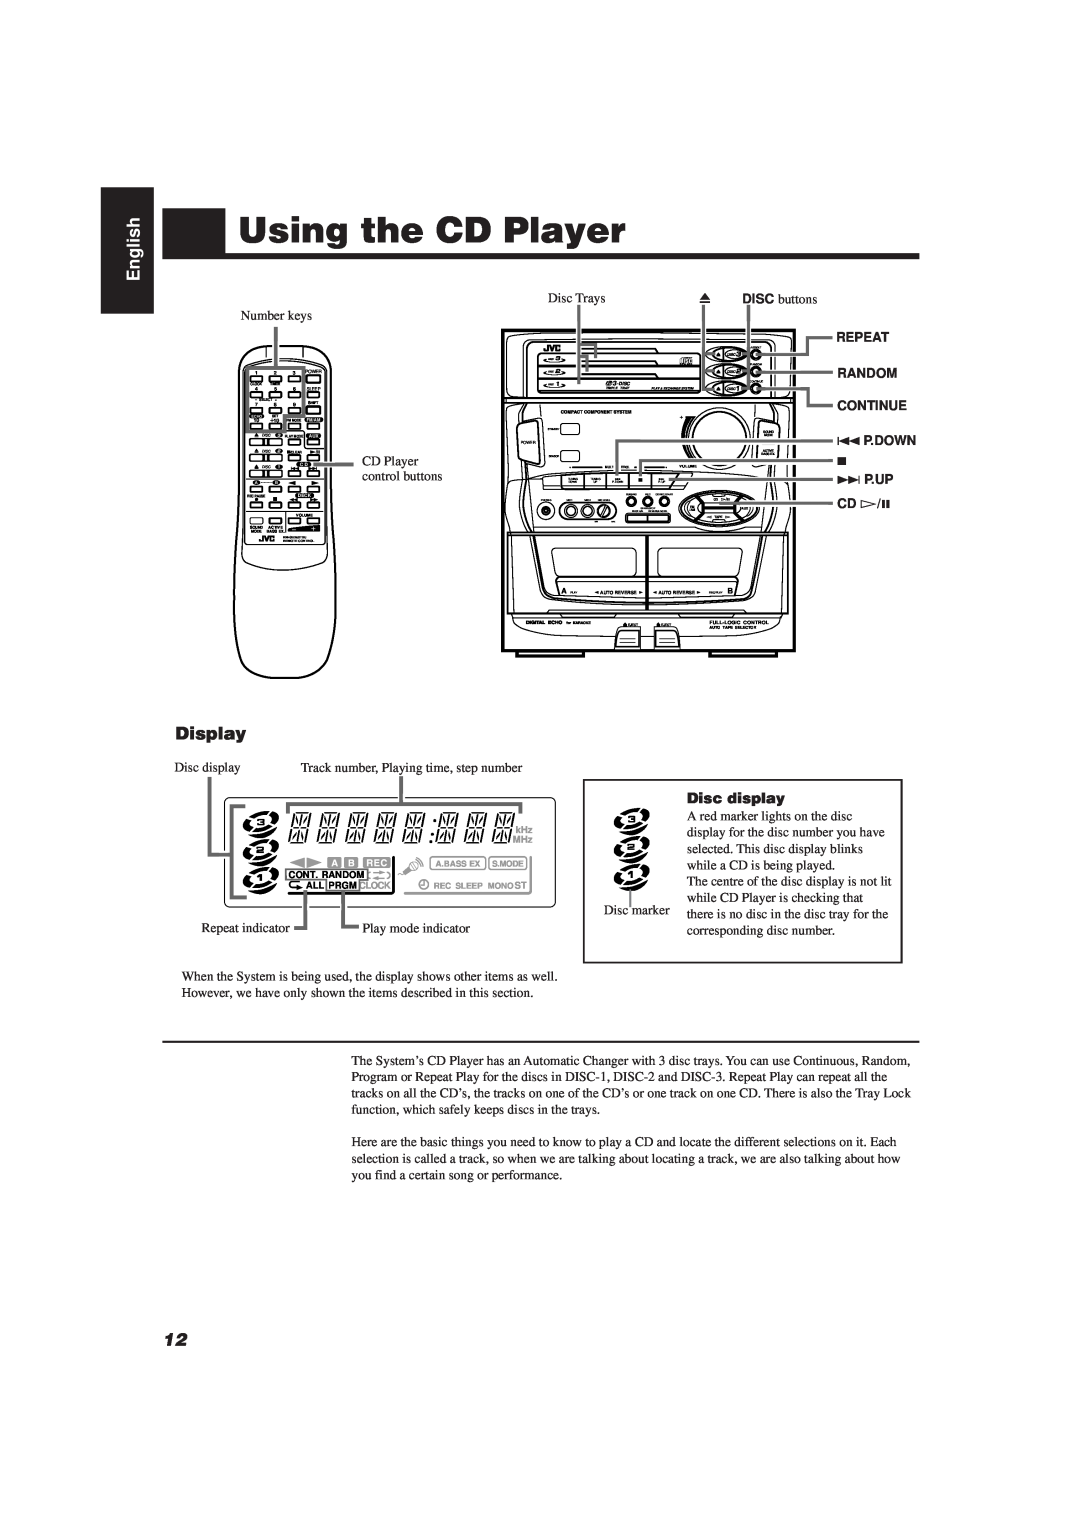 JVC MX-D401T, CA-D501T manual Using the CD Player, English, Repeat, Random, Continue, 4P.DOWN, ¢ P.Up, CD Ü/8, Disc display 